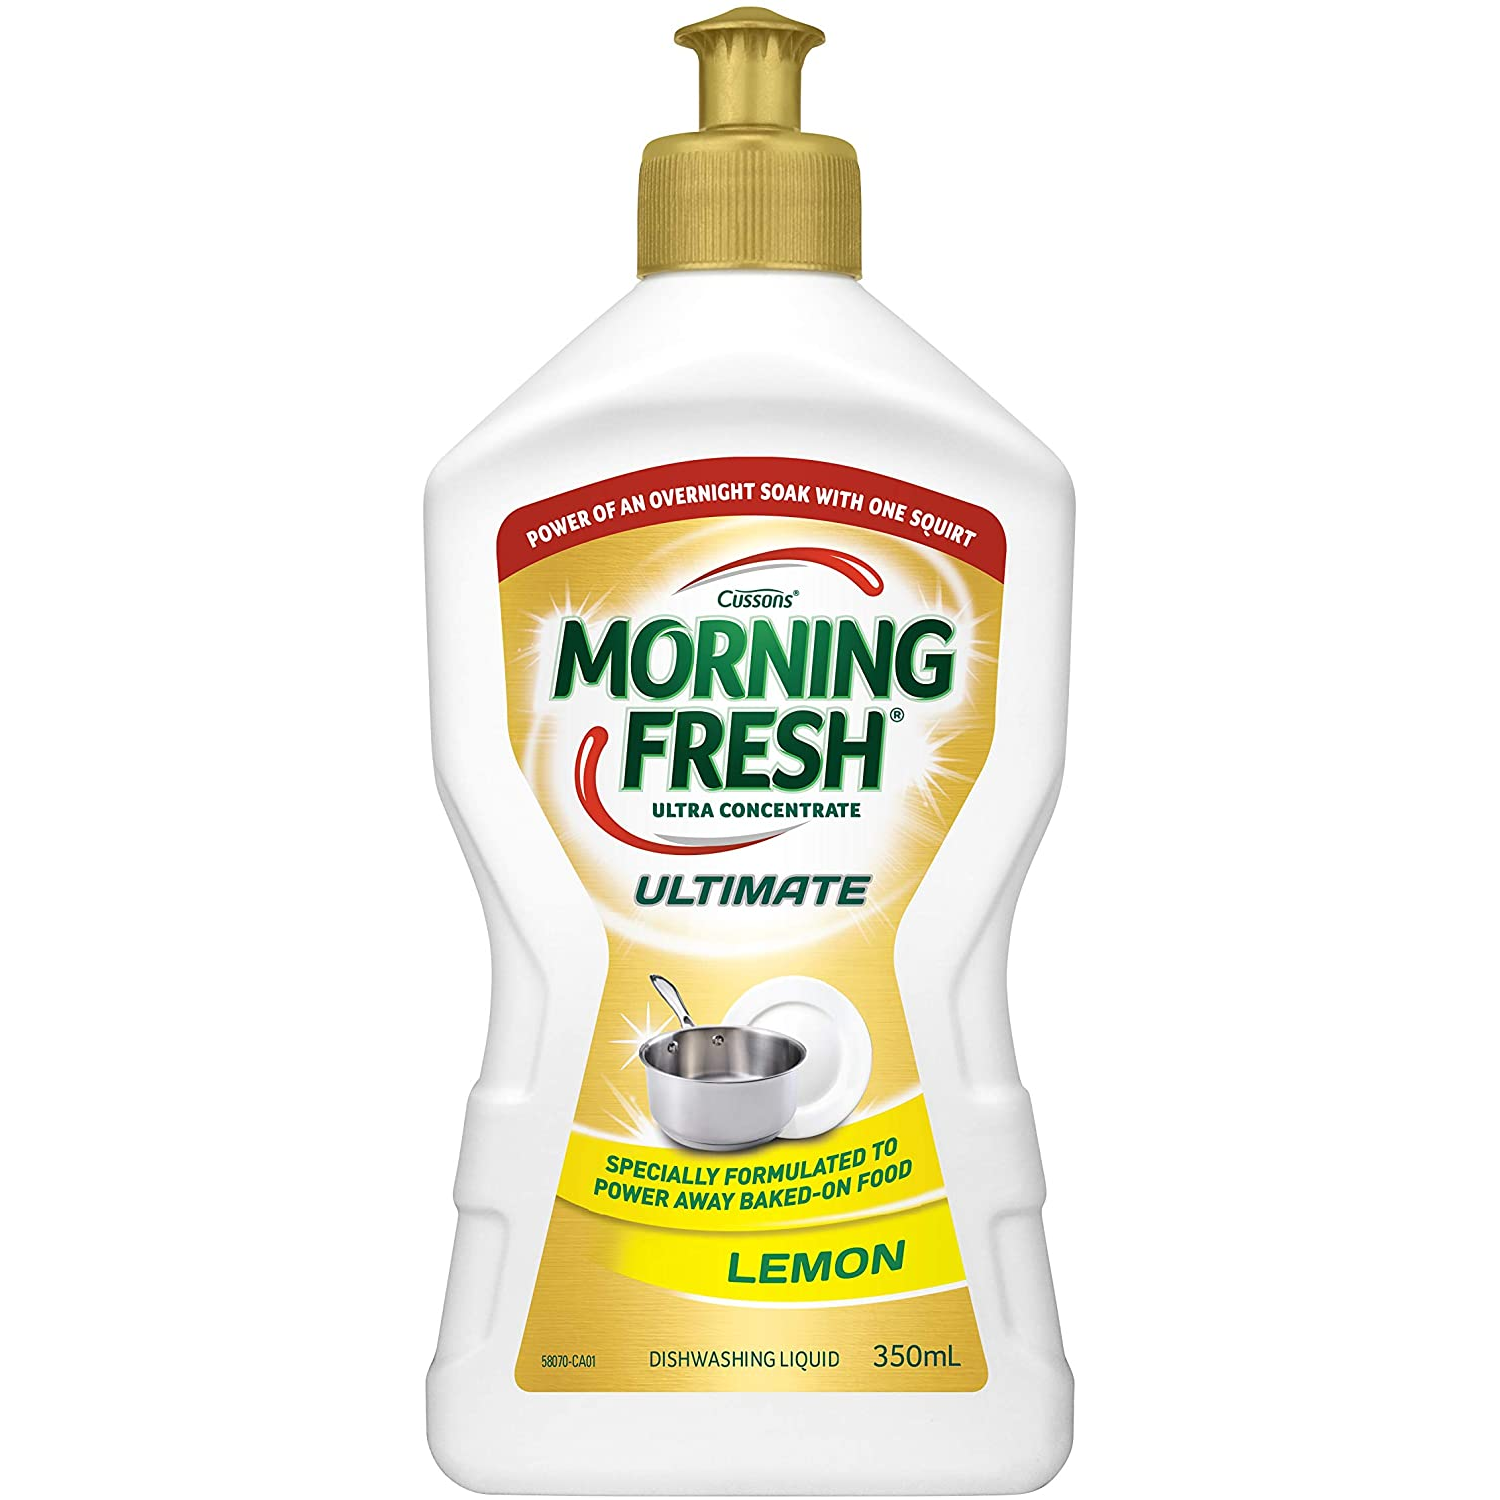 Morning Fresh Ultra Concentrate Ultimate (Lemon) - 350ml